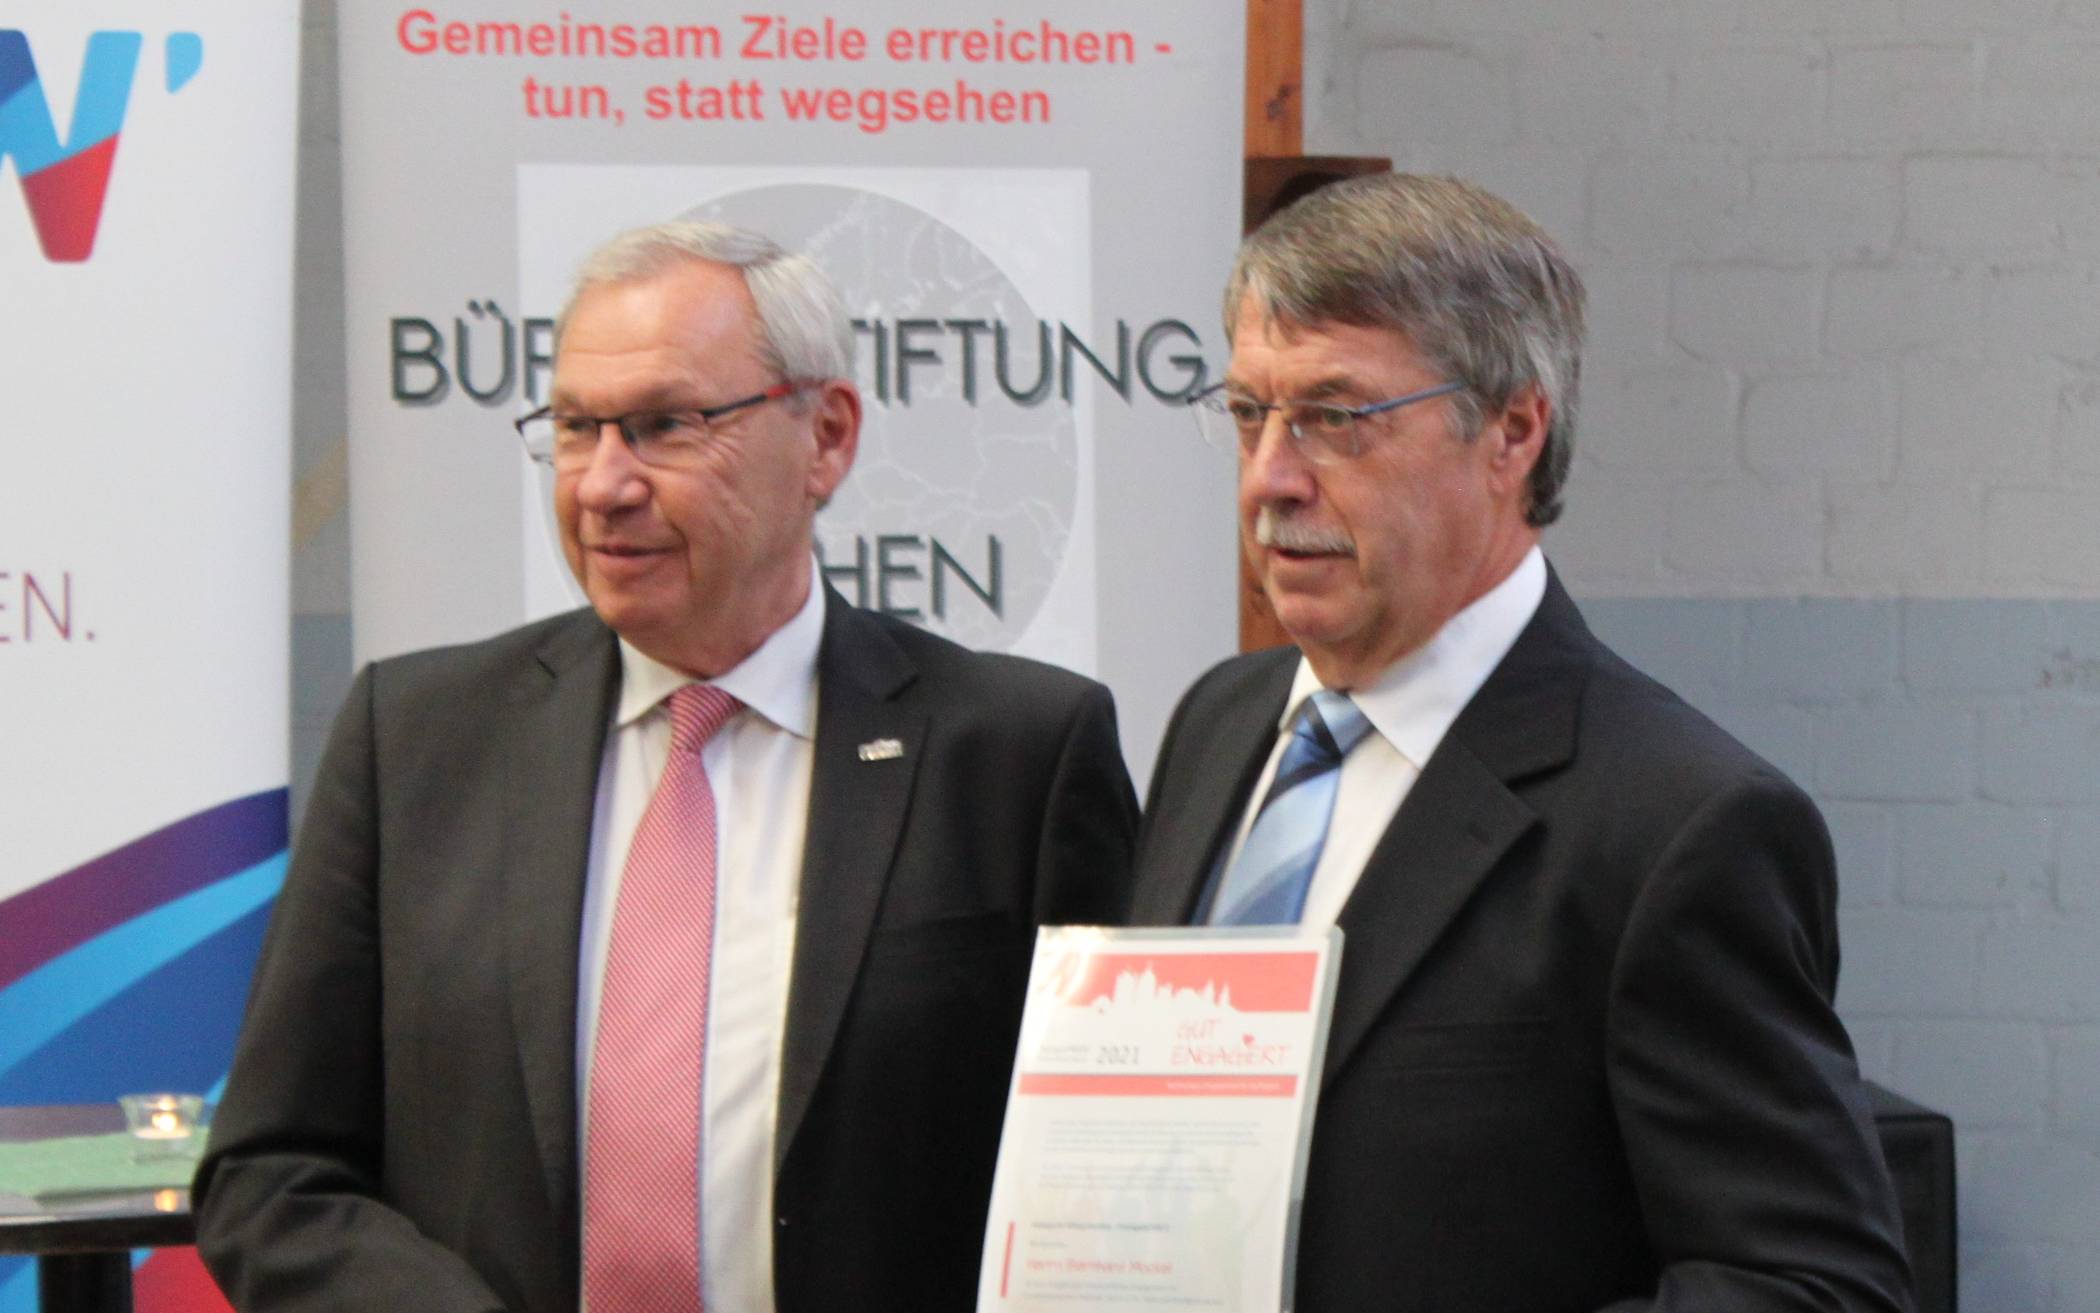 Bernd Mockel mit Bürgerpreis geehrt